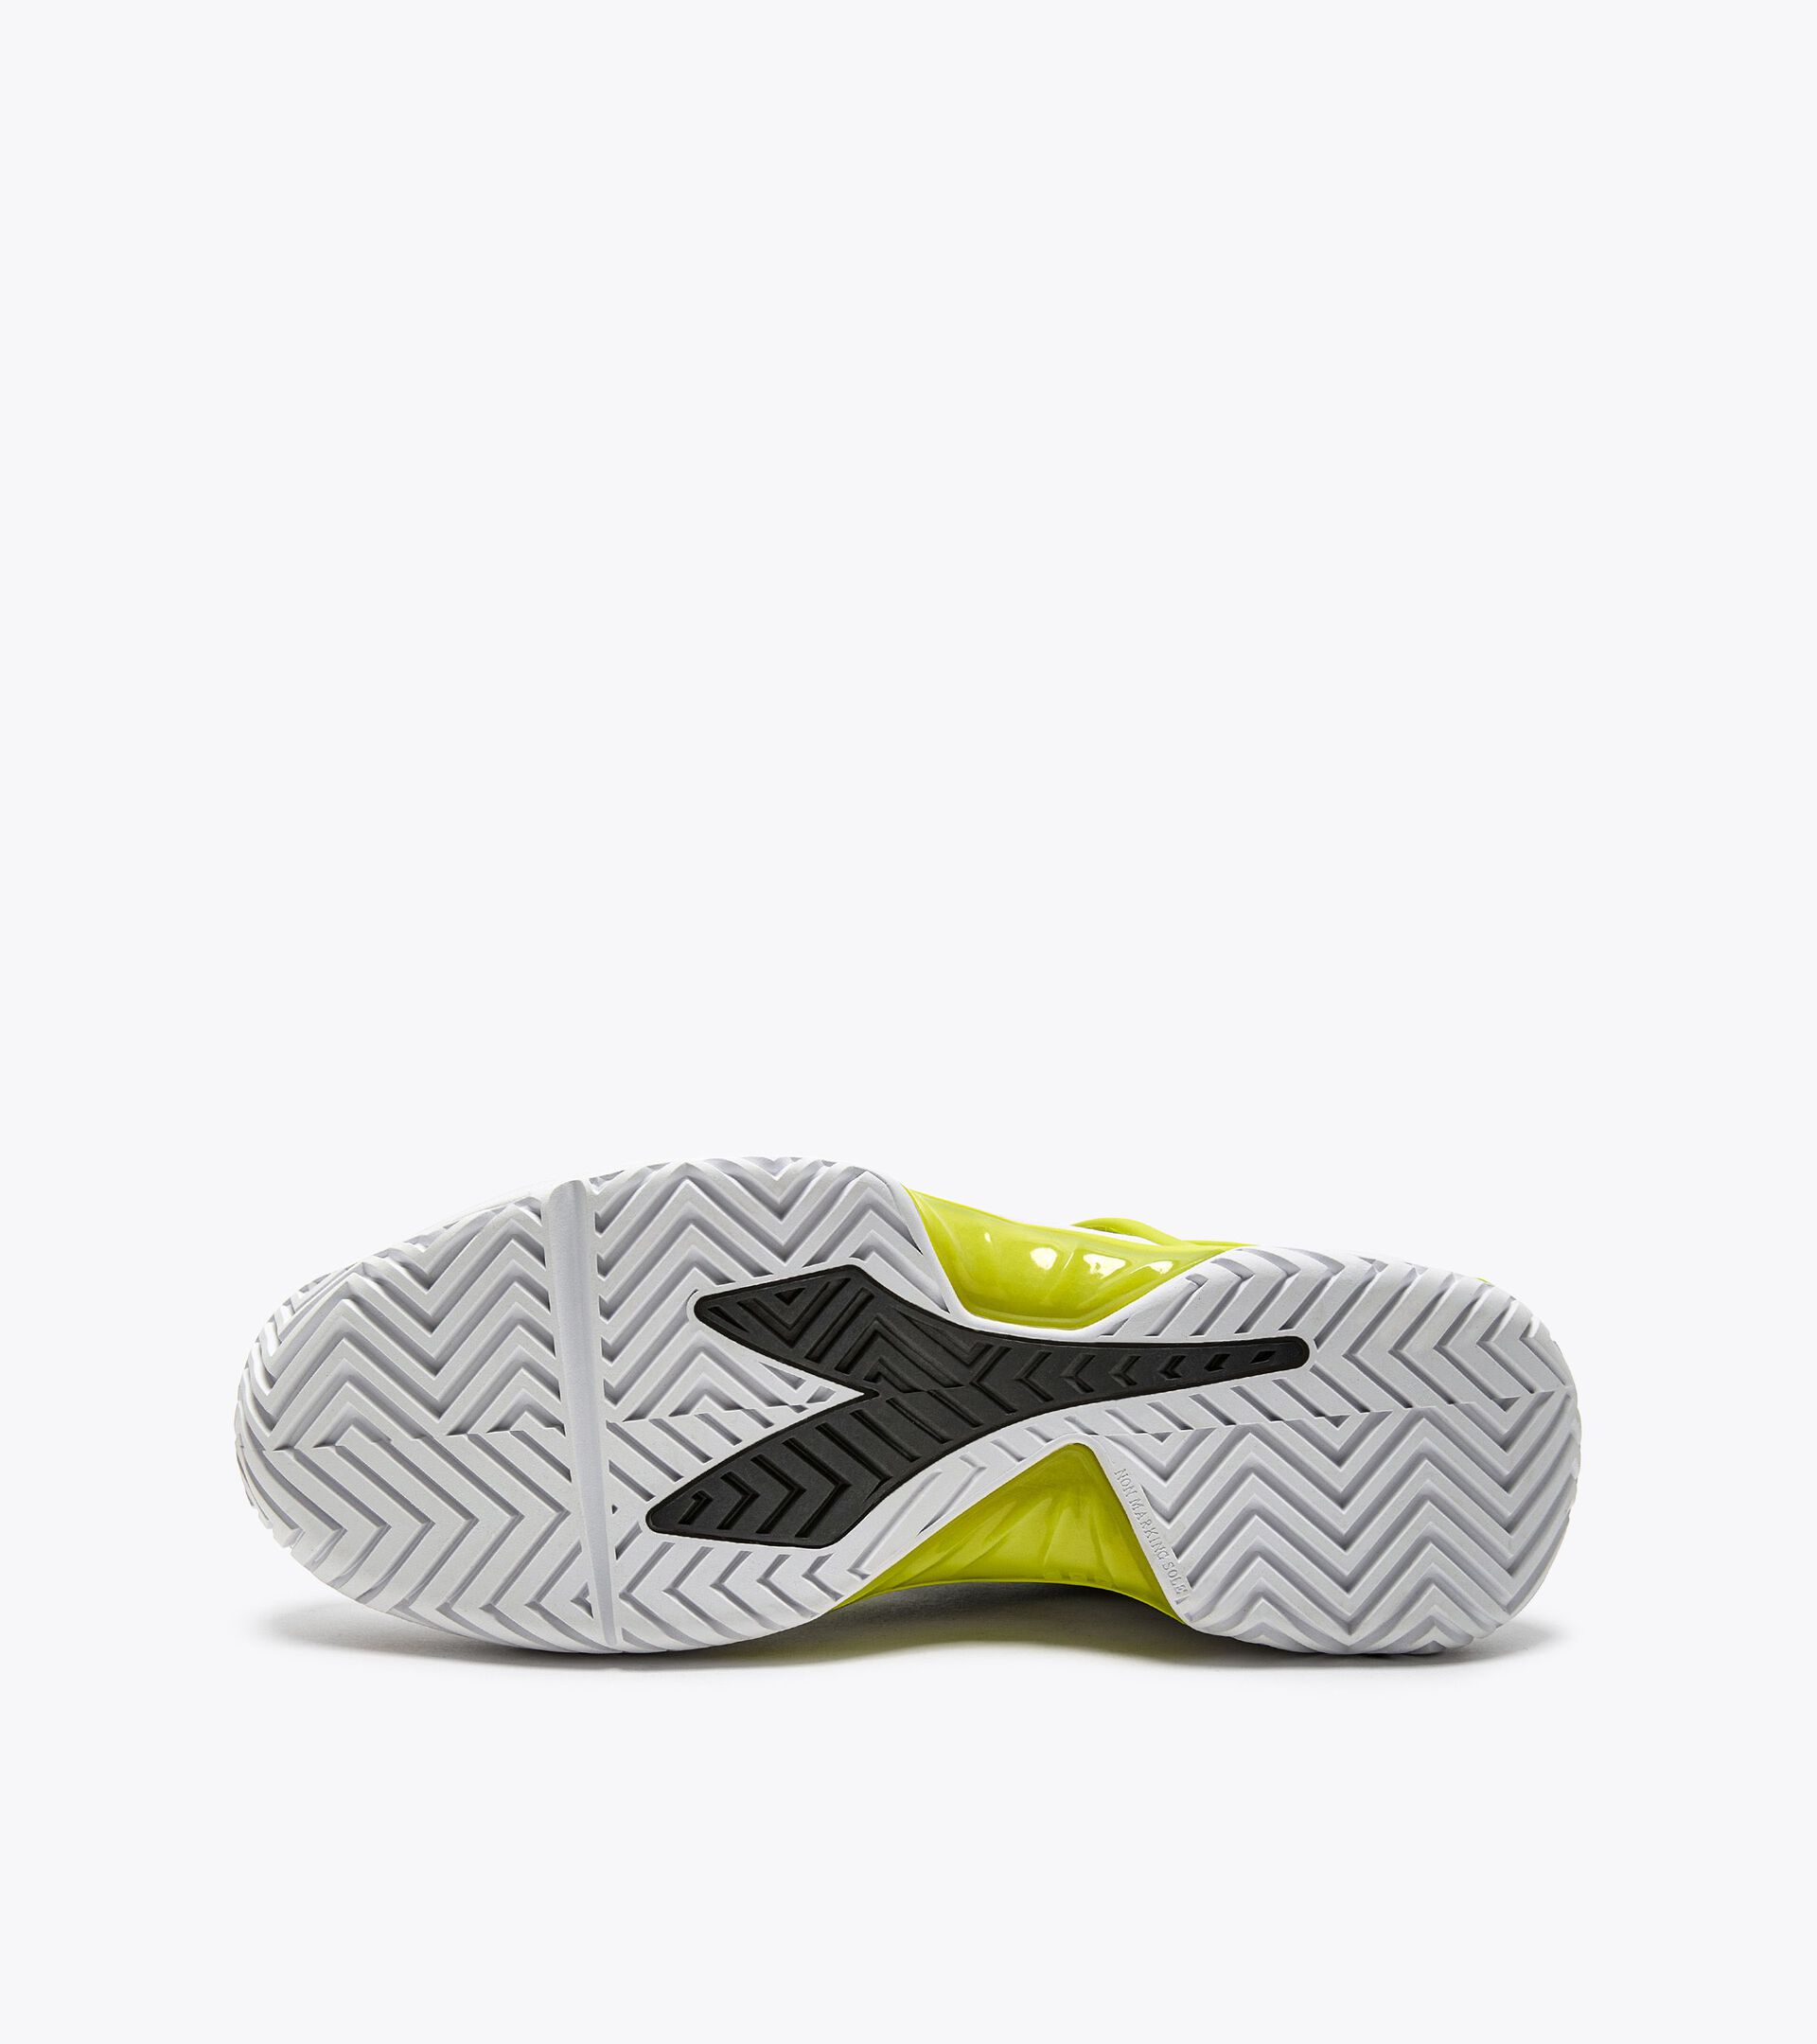 Tennis shoes for hard surfaces or clay courts - Women B.ICON 2 W AG WHITE/BLACK/EVENING PRIMROSE - Diadora